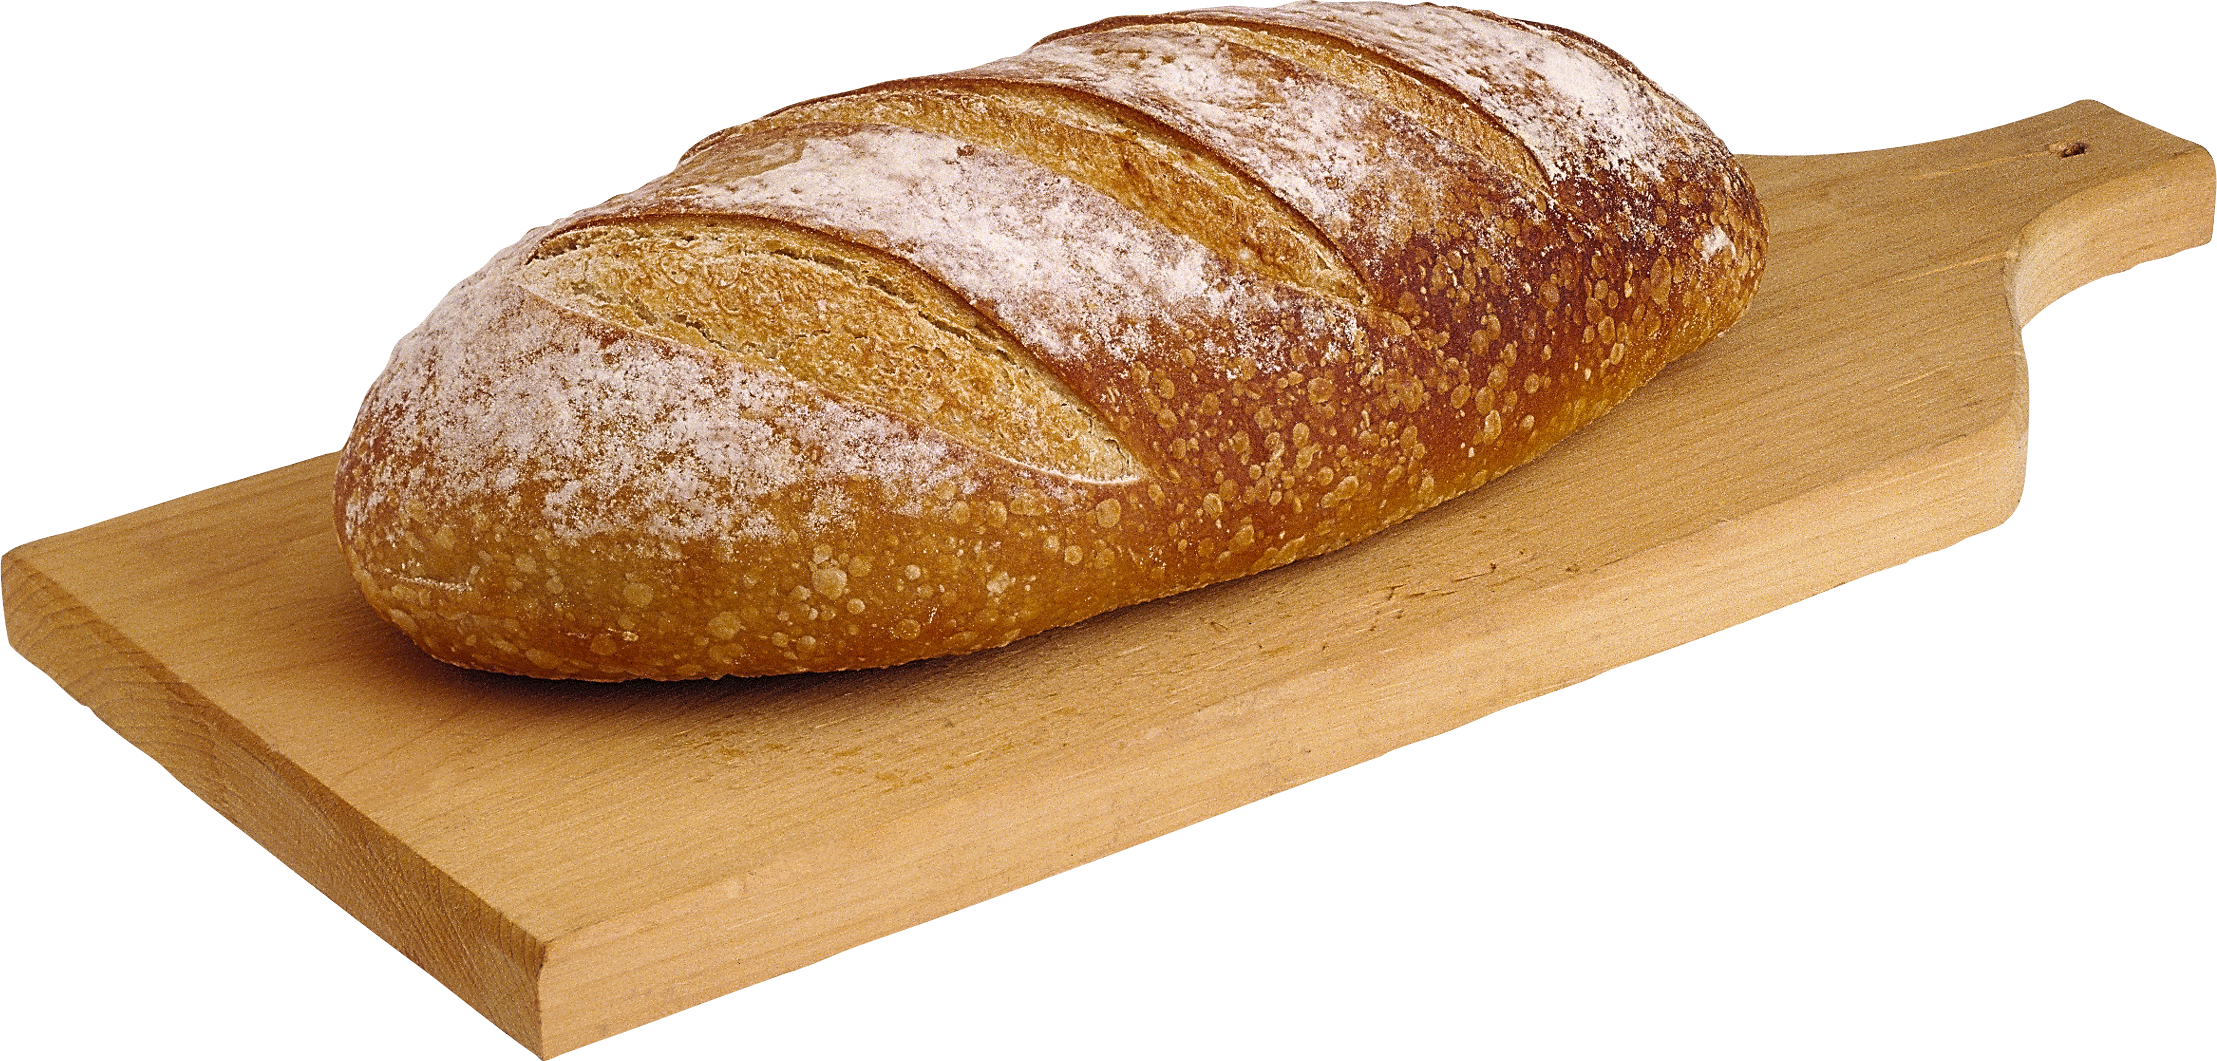 Italian Bread PNG Transparent Image